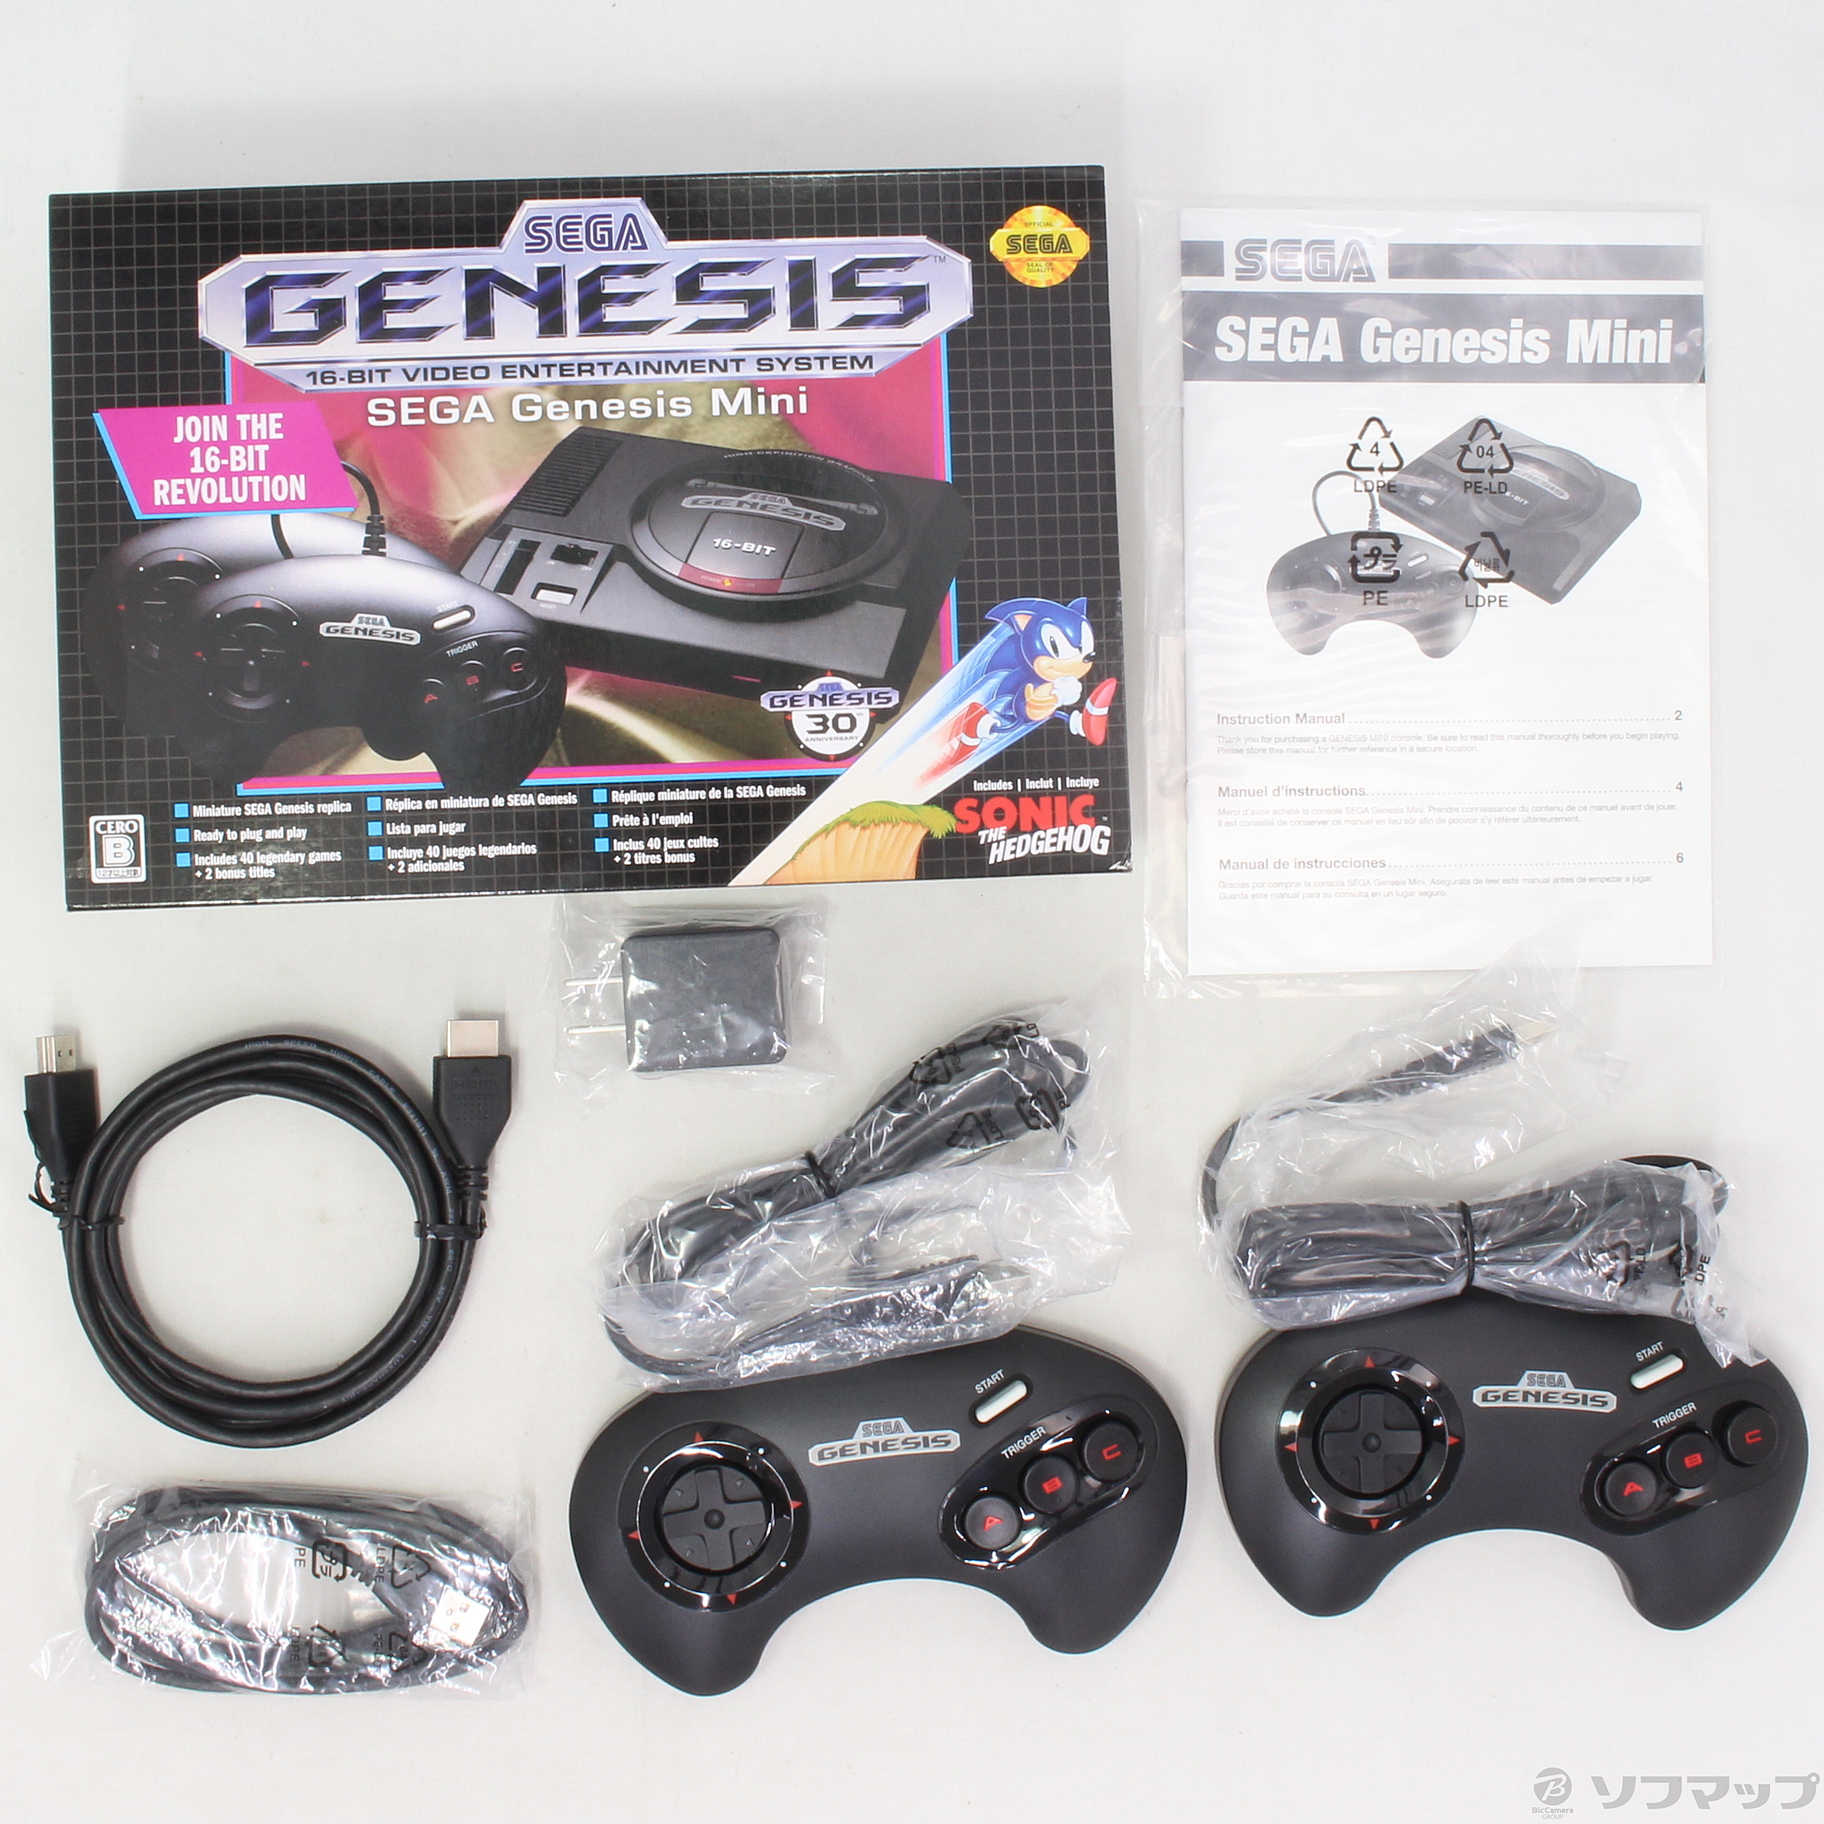 Sega Genesis Mini (セガ ジェネシス ミニ)